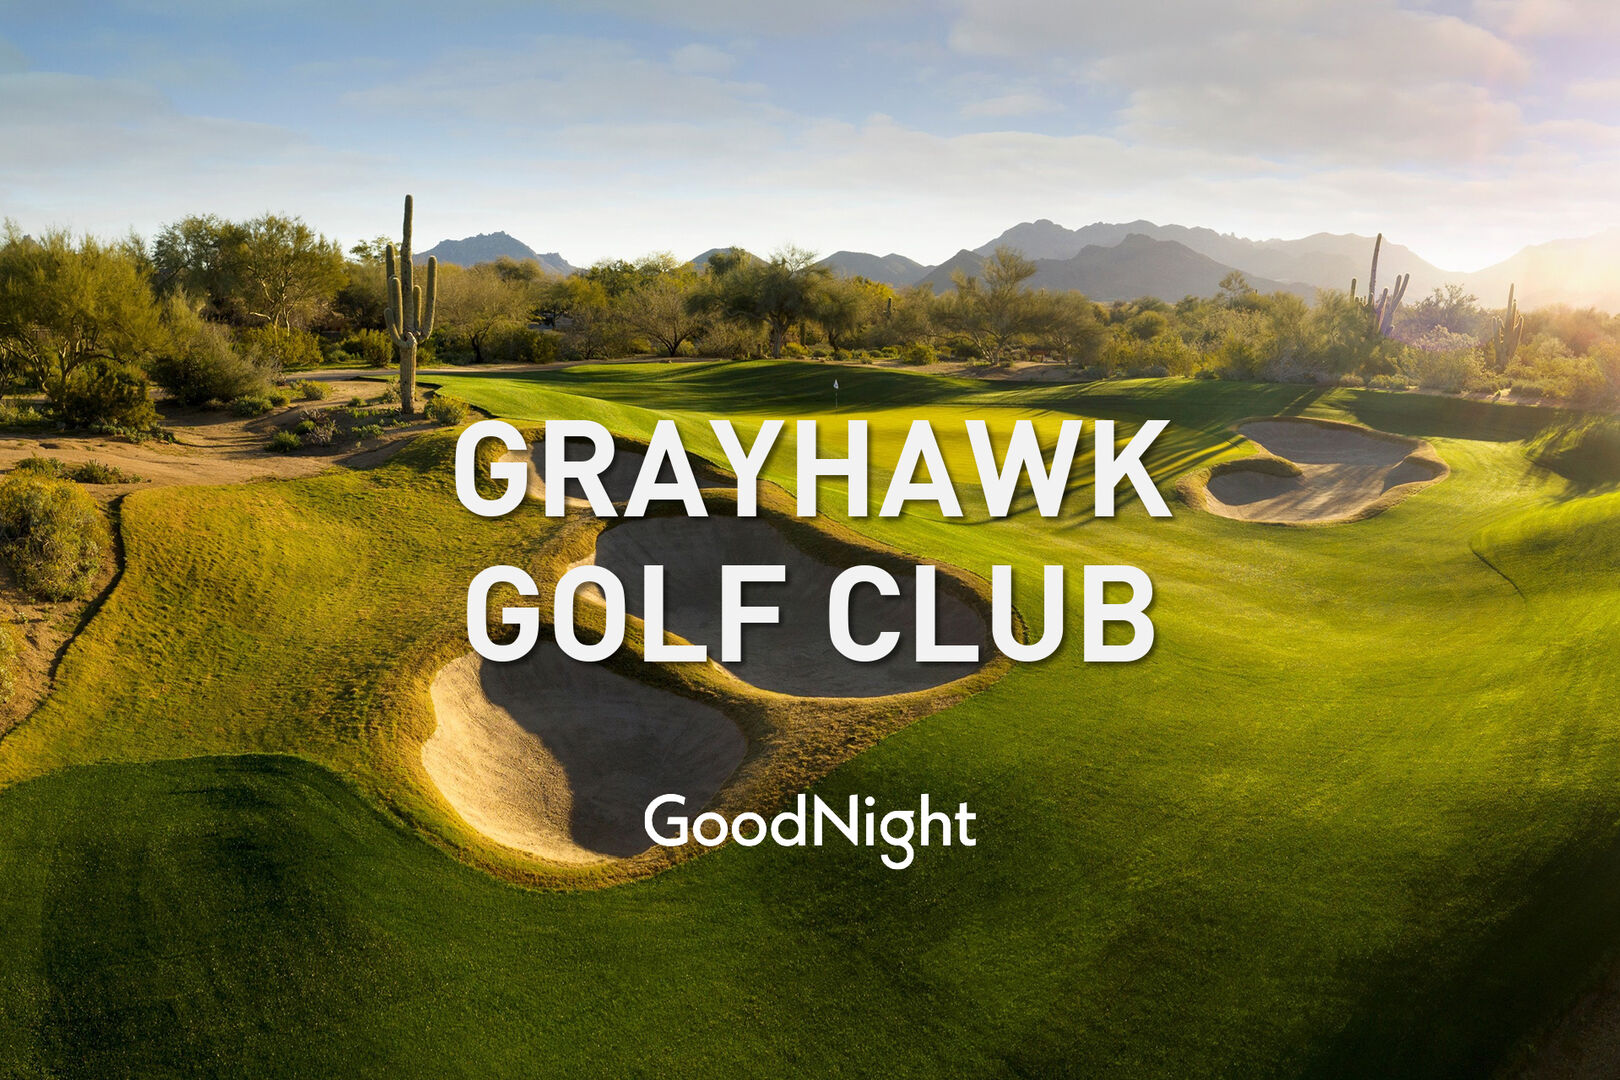 10 mins: Grayhawk Golf Club